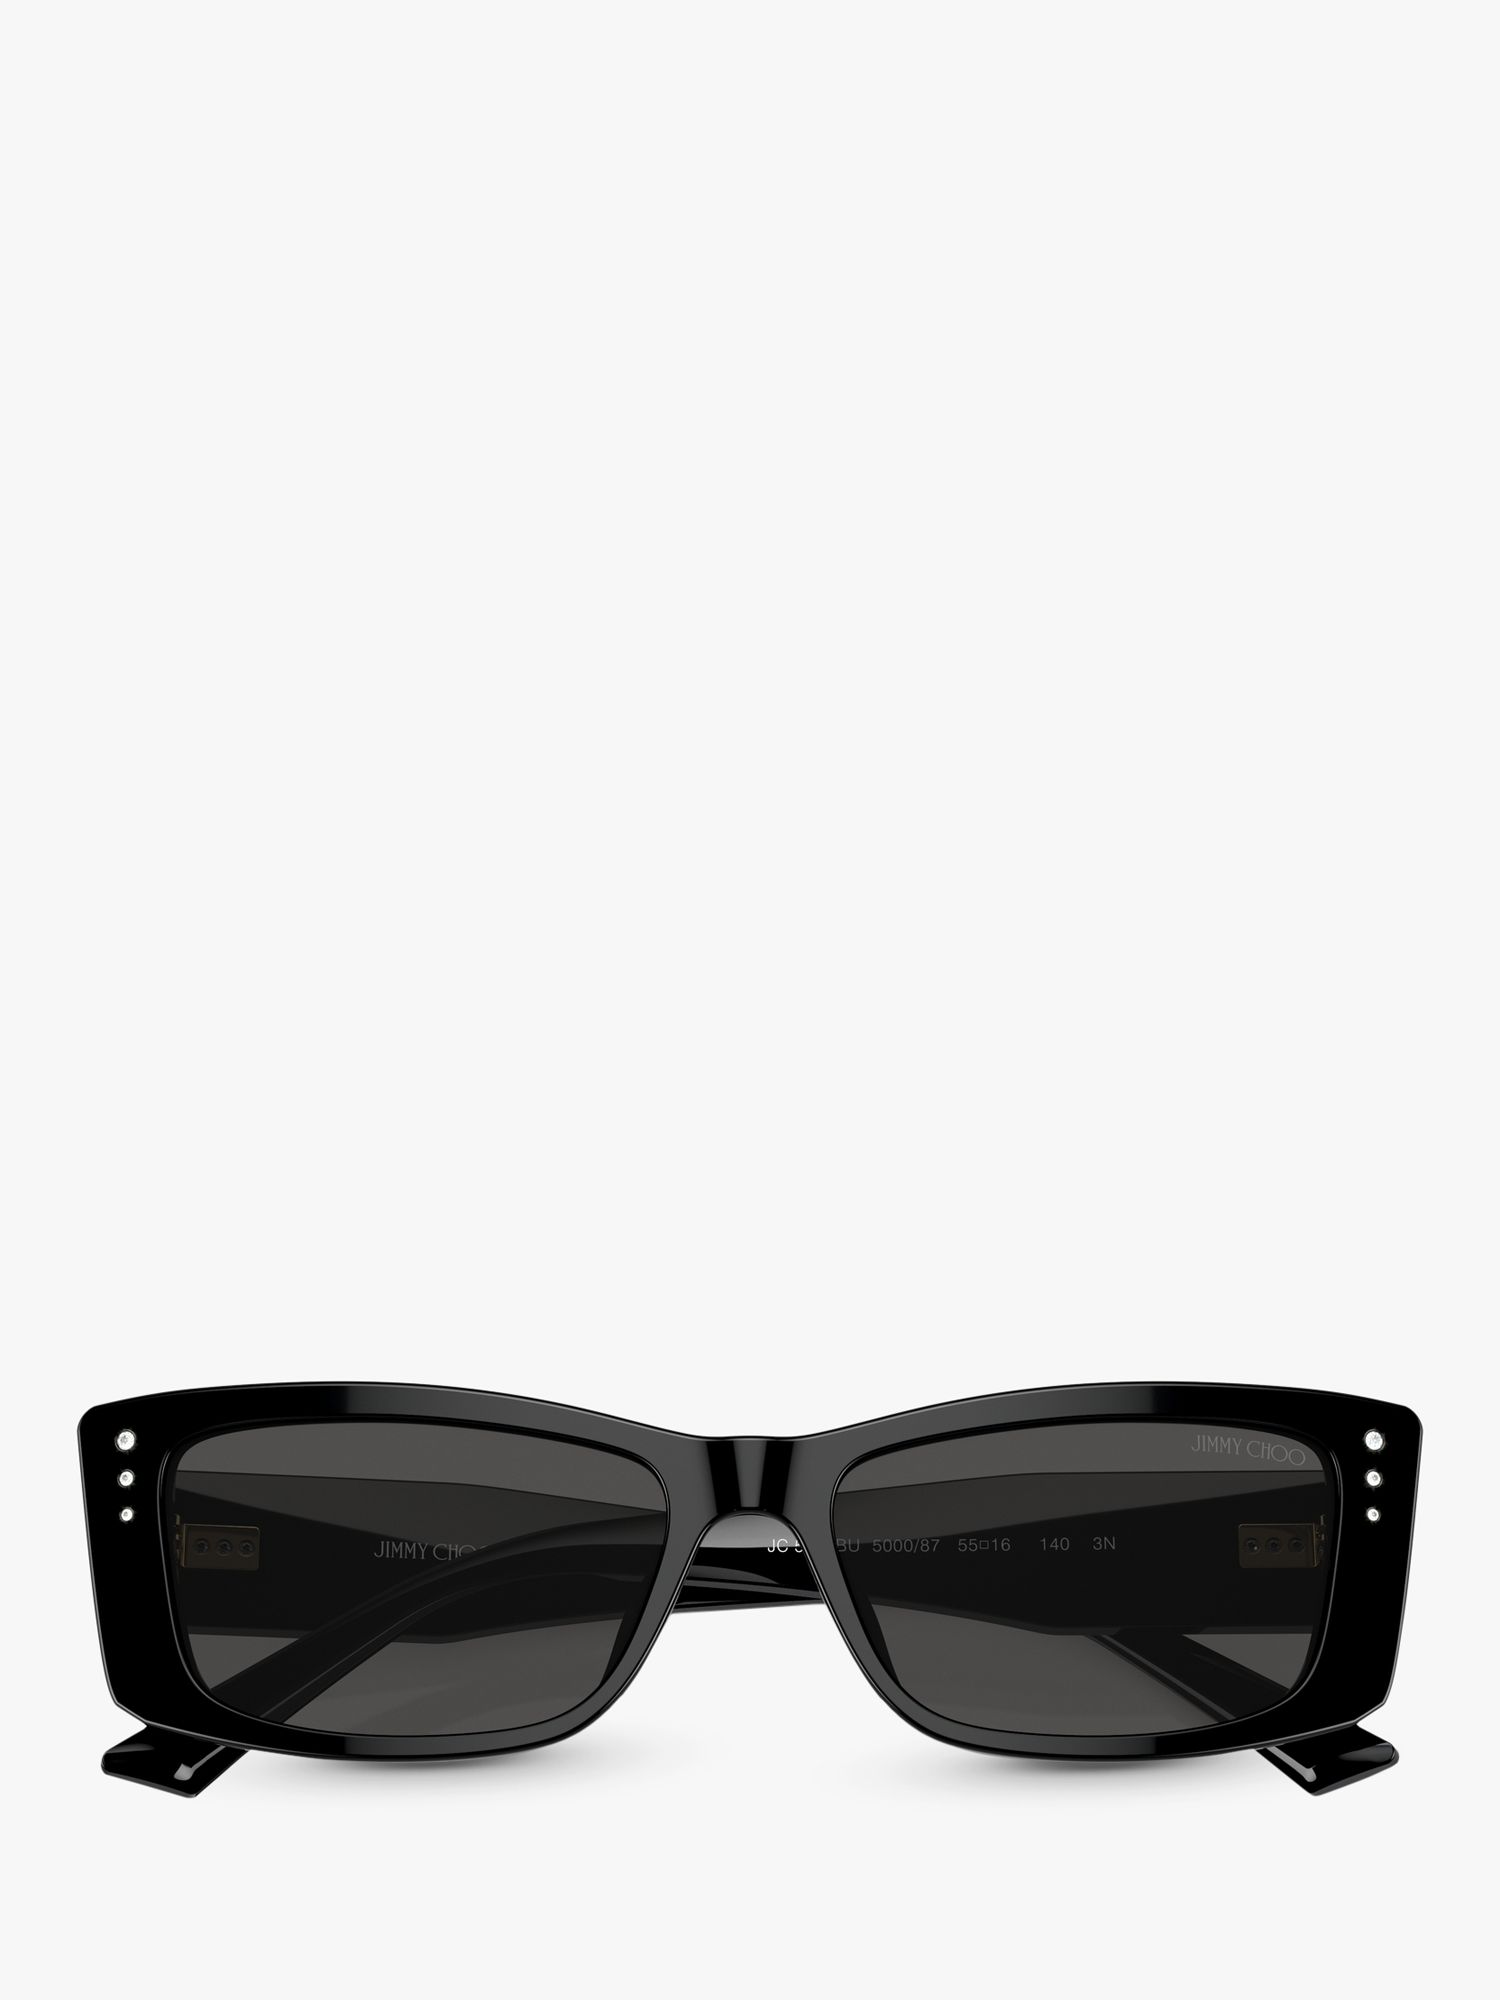 Buy Jimmy Choo JC5002BU Women's Rectangular Sunglasses, Black Online at johnlewis.com